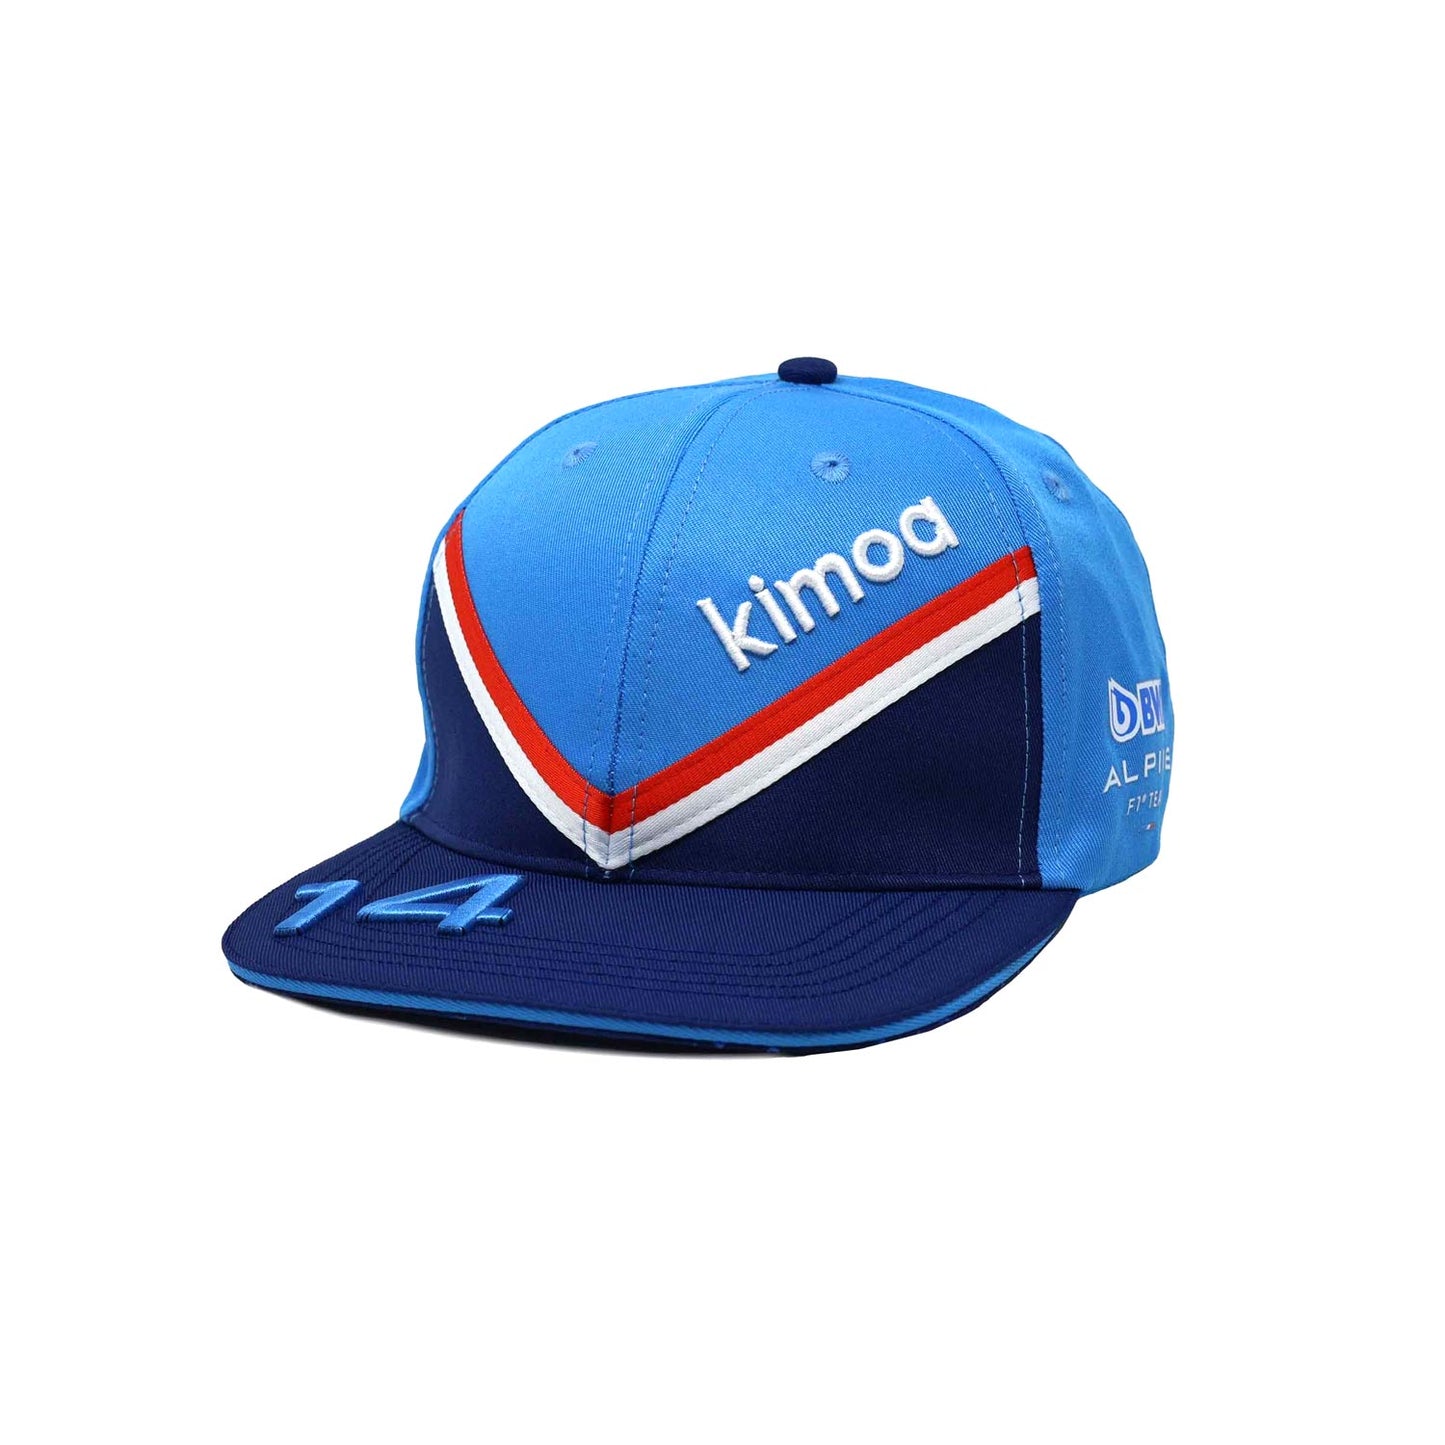 2022 Alonso France Alpine F1 baseball cap